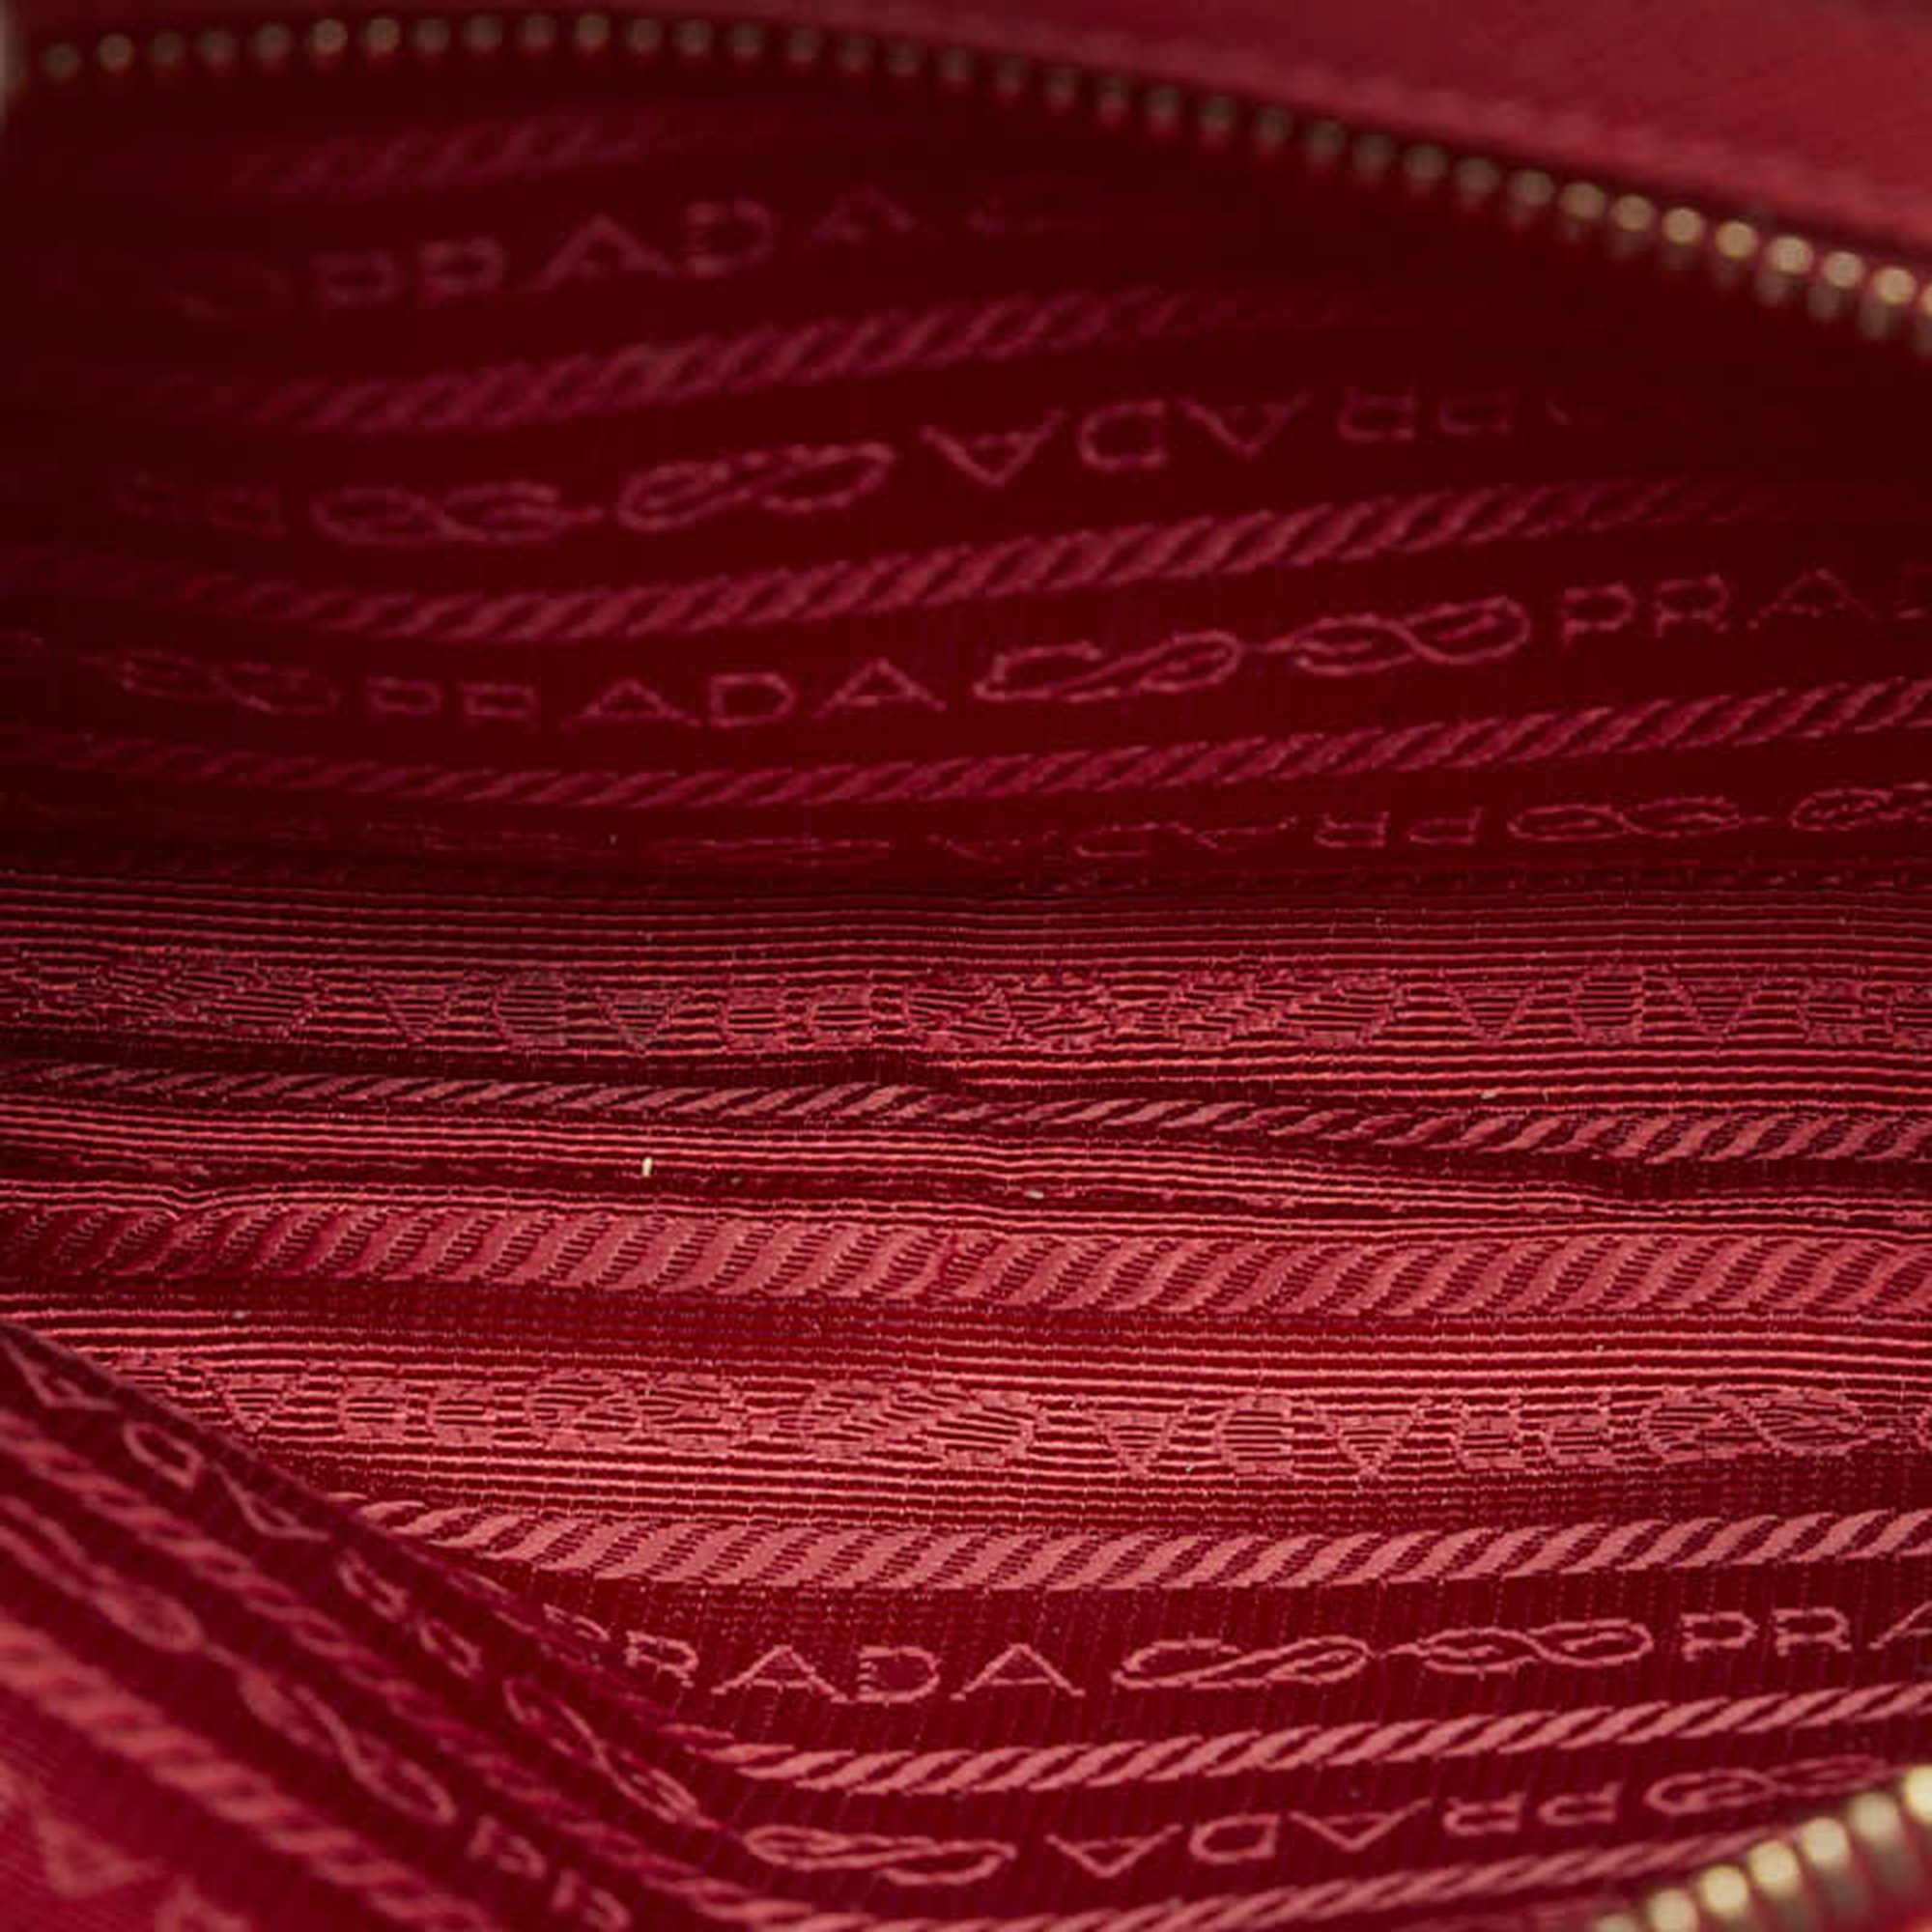 Prada Red Saffiano Lux Double Zip Crossbody Bag